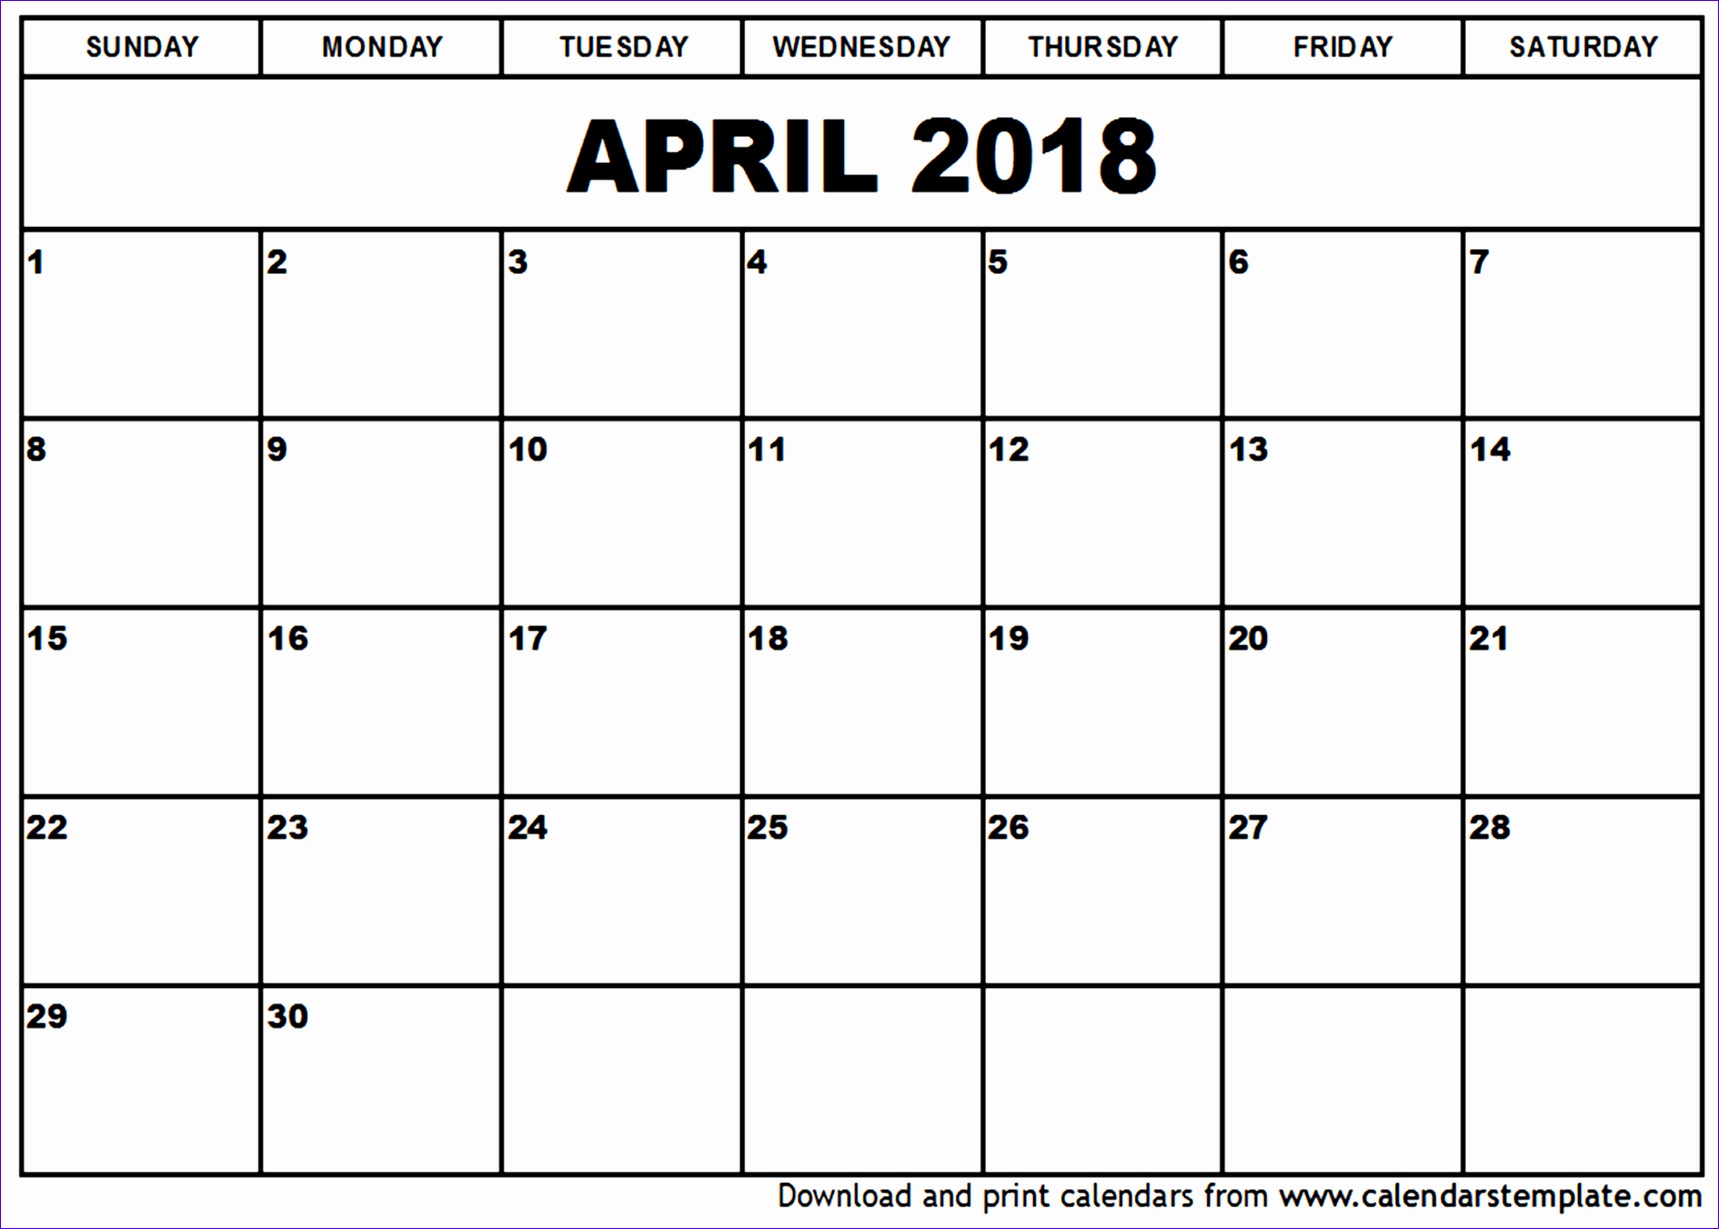 april 2018 calendar template 1848 17191229